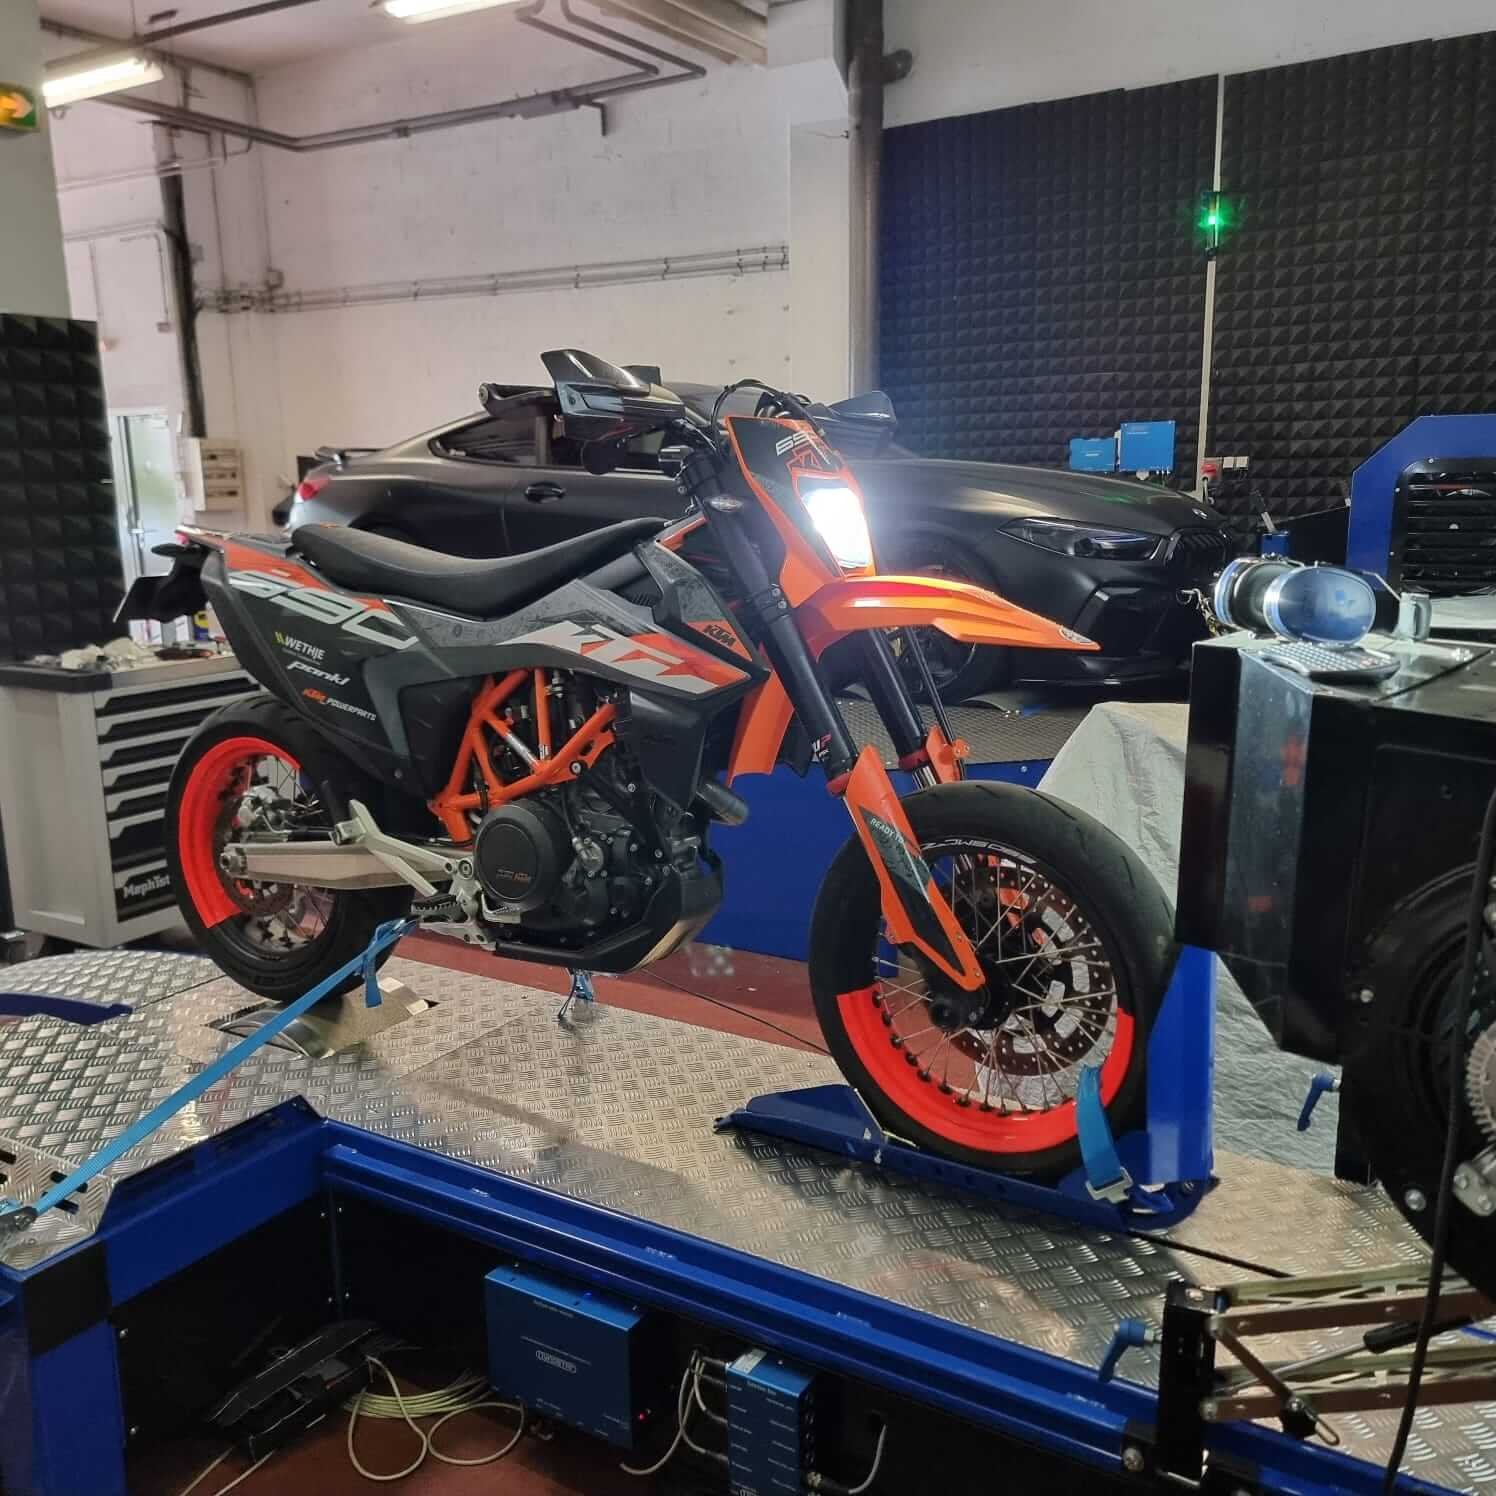 Debridage moto KTM SMC reprogrammation moteur moto KTM 690 SMC R 47Cv (A2) Paris France